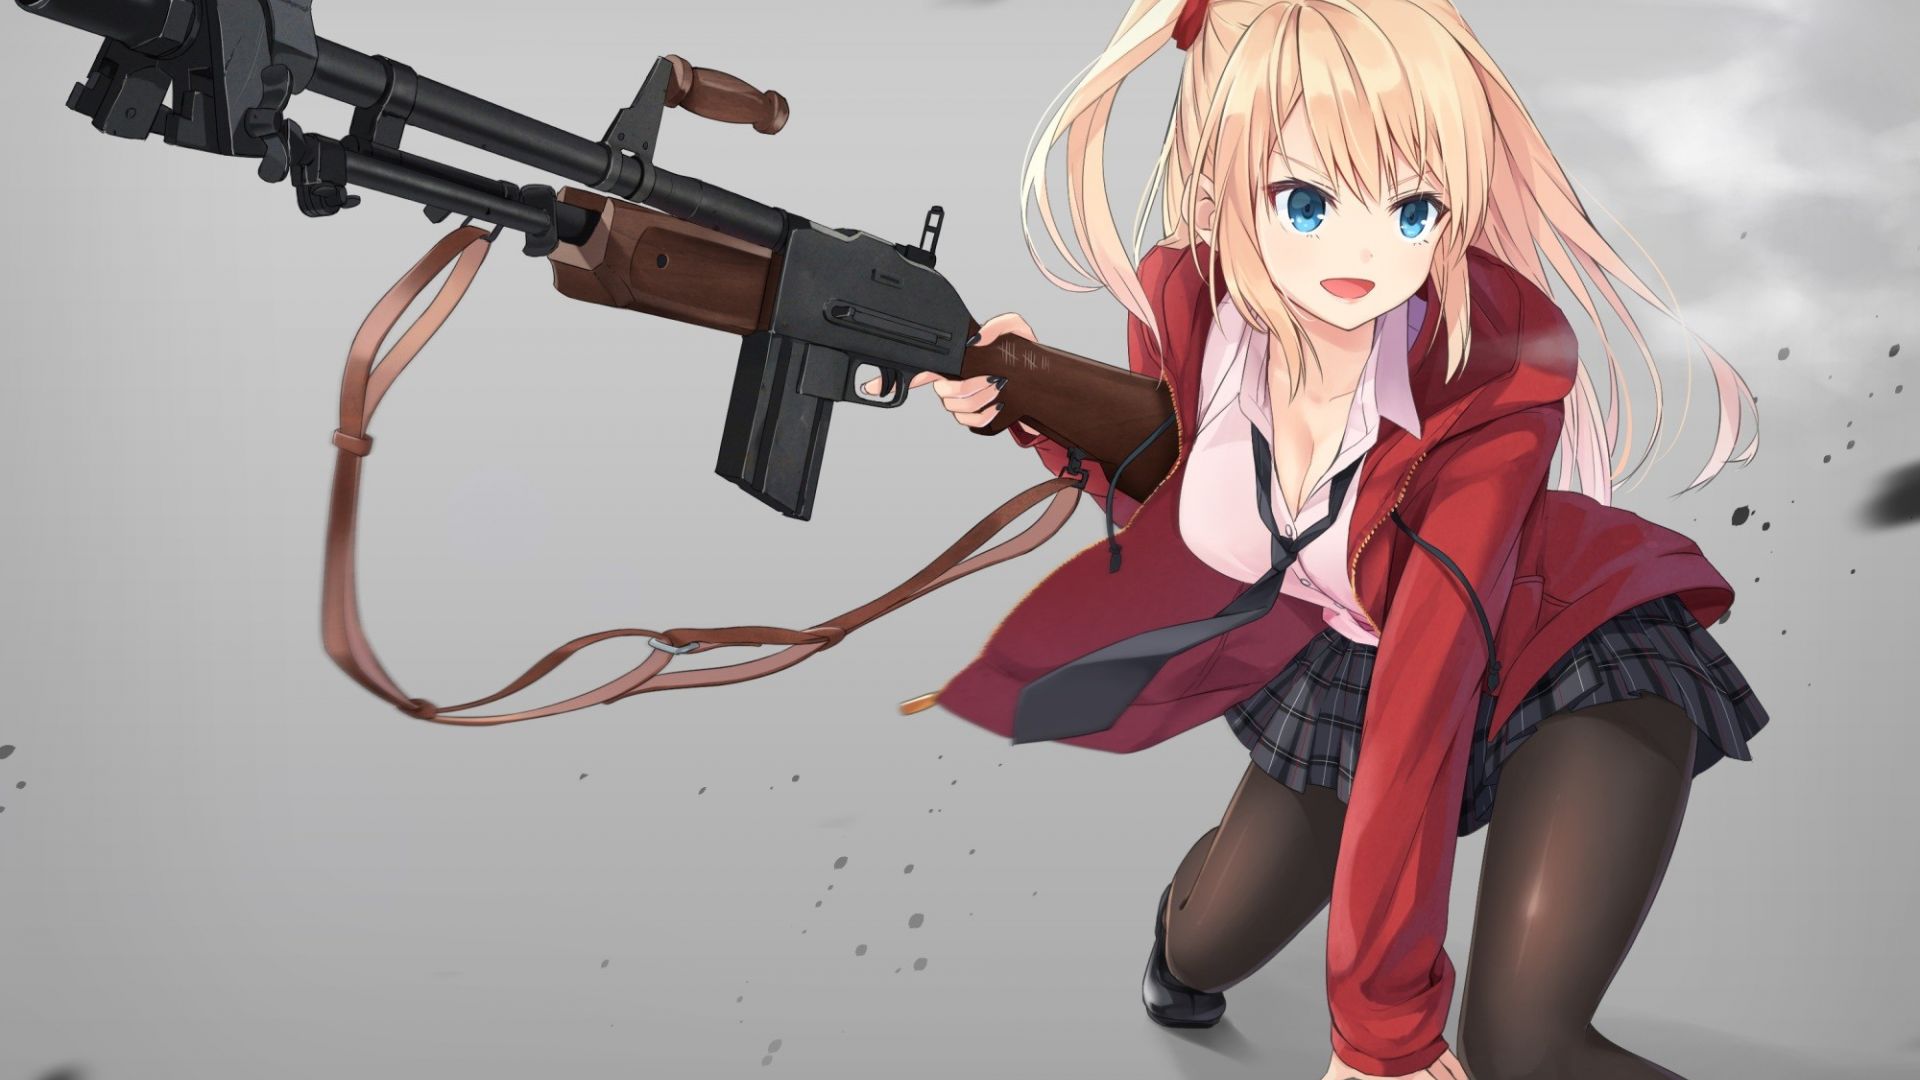 Wallpaper Long hair anime girl with gun